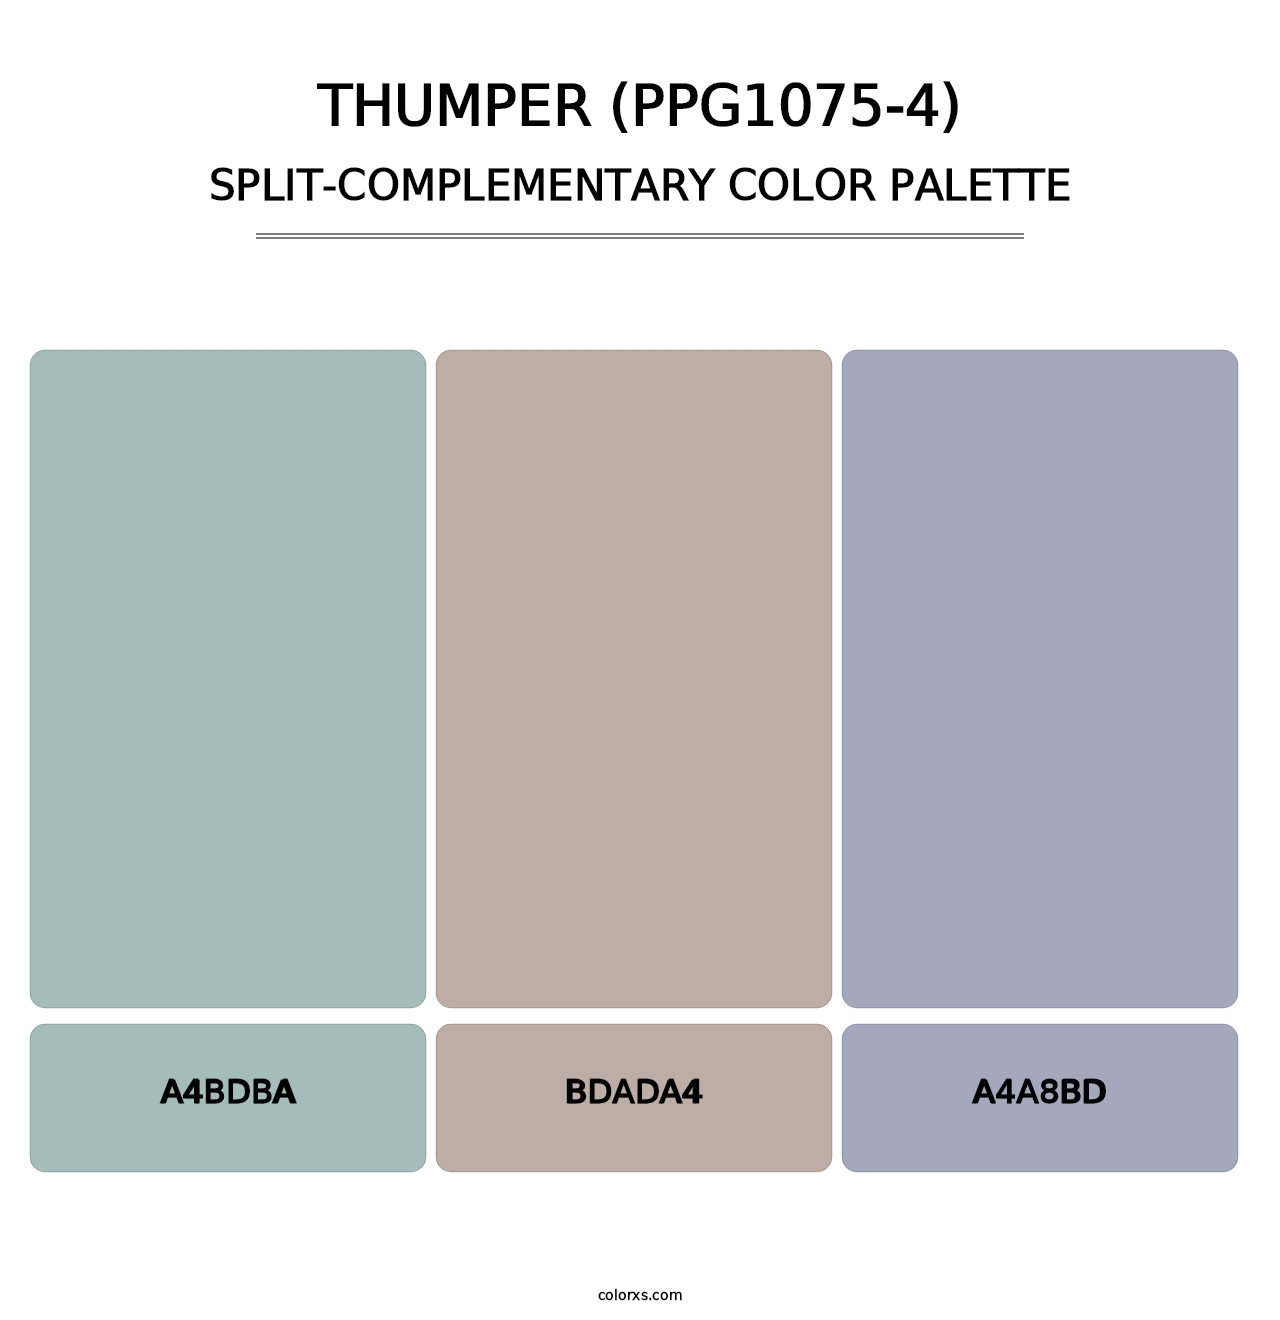 Thumper (PPG1075-4) - Split-Complementary Color Palette